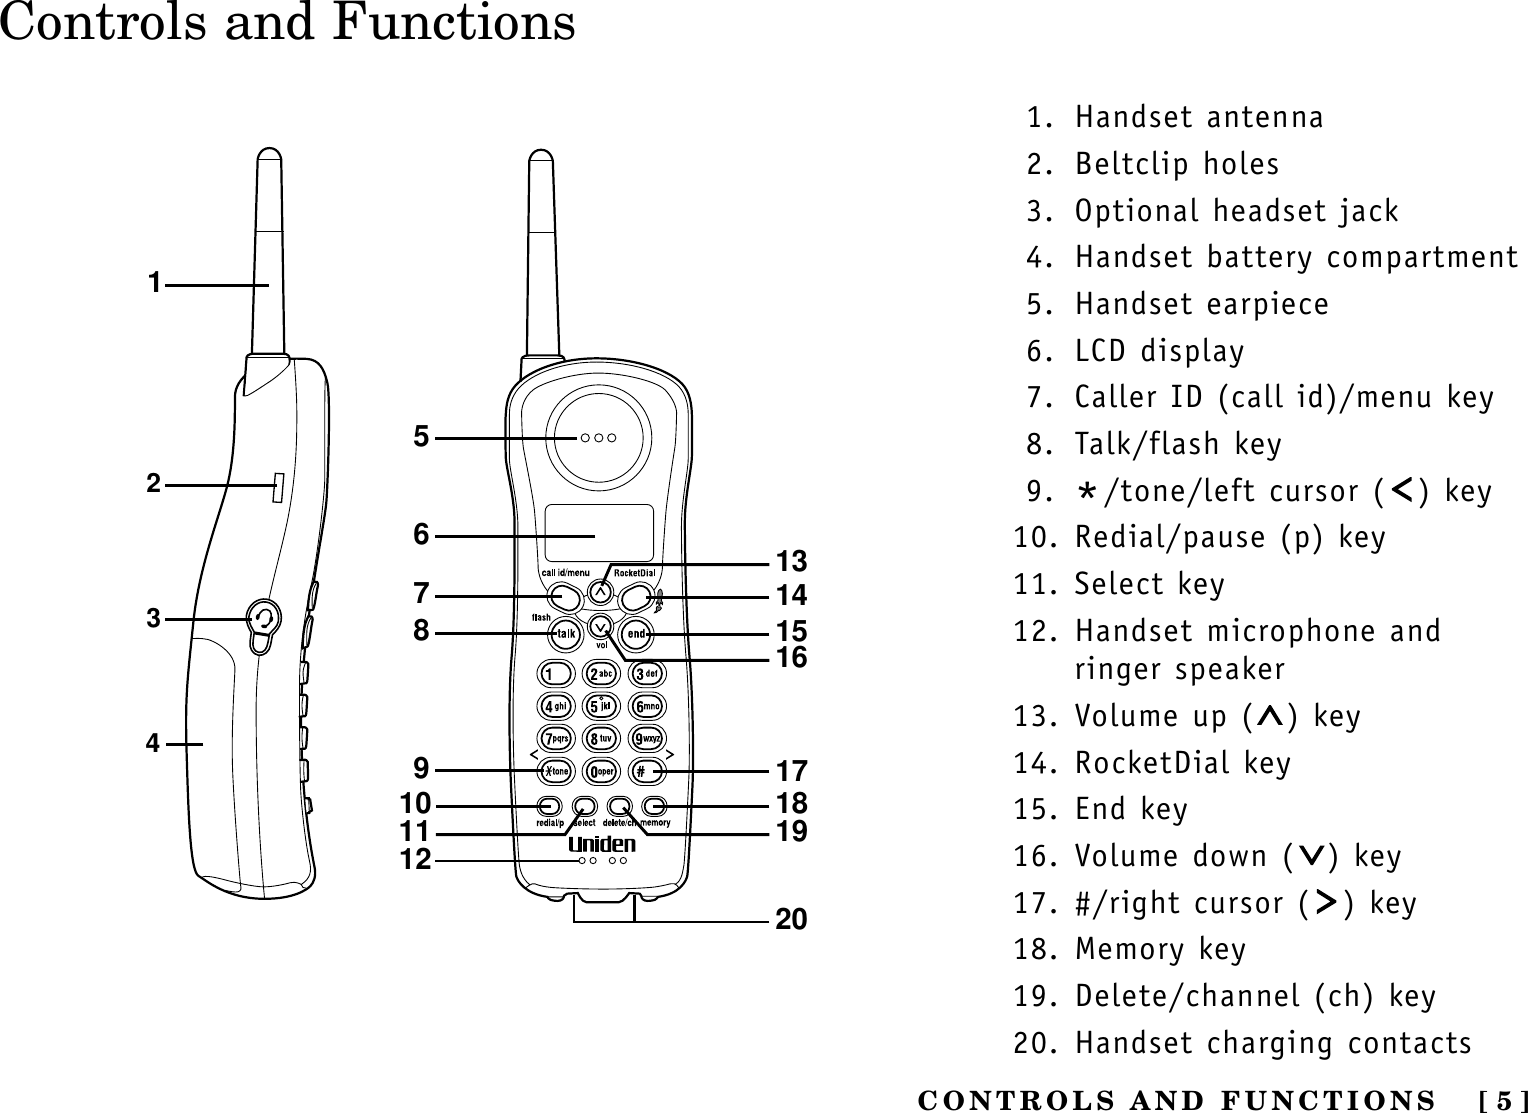 [ 5 ]CONTROLS AND FUNCTIONSControls and Functions2341576891120161514131012 1918171. Handset antenna2. Beltclip holes3. Optional headset jack4. Handset battery compartment5. Handset earpiece6. LCD display7. Caller ID (call id)/menu key8. Talk/flash key9. */tone/left cursor ( ) key10. Redial/pause (p) key11. Select key12. Handset microphone and ringer speaker13. Volume up ( ) key14. RocketDial key15. End key16. Volume down ( ) key17. #/right cursor ( ) key18. Memory key19. Delete/channel (ch) key20. Handset charging contacts